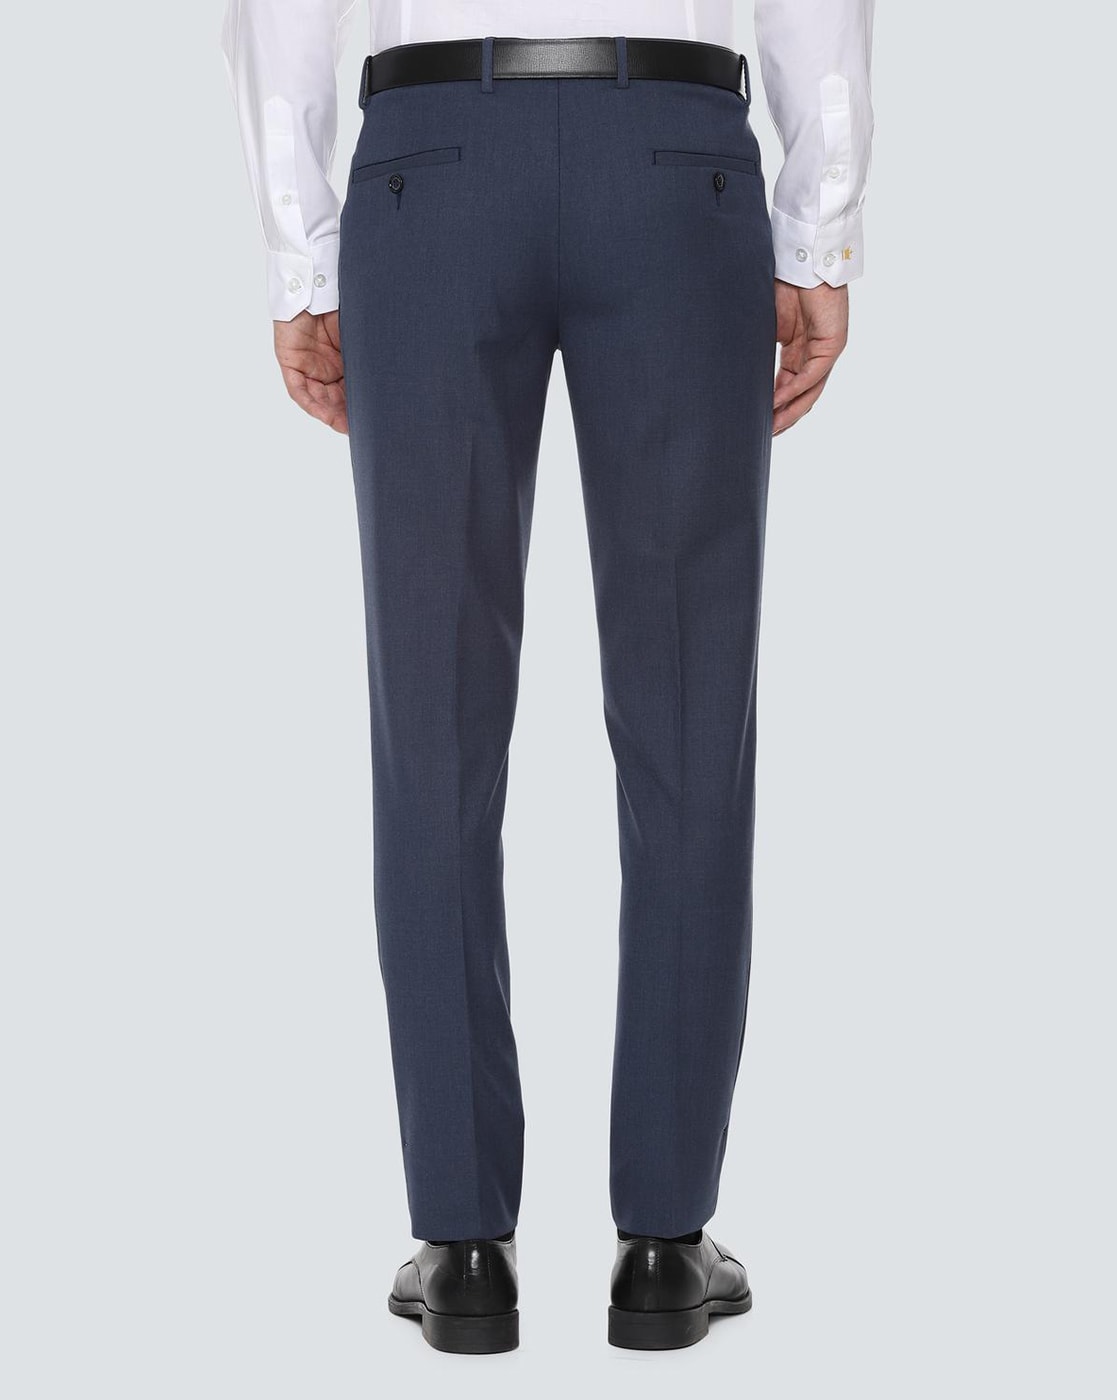 Regular Fit Suit trousers - Navy blue - Men | H&M IN